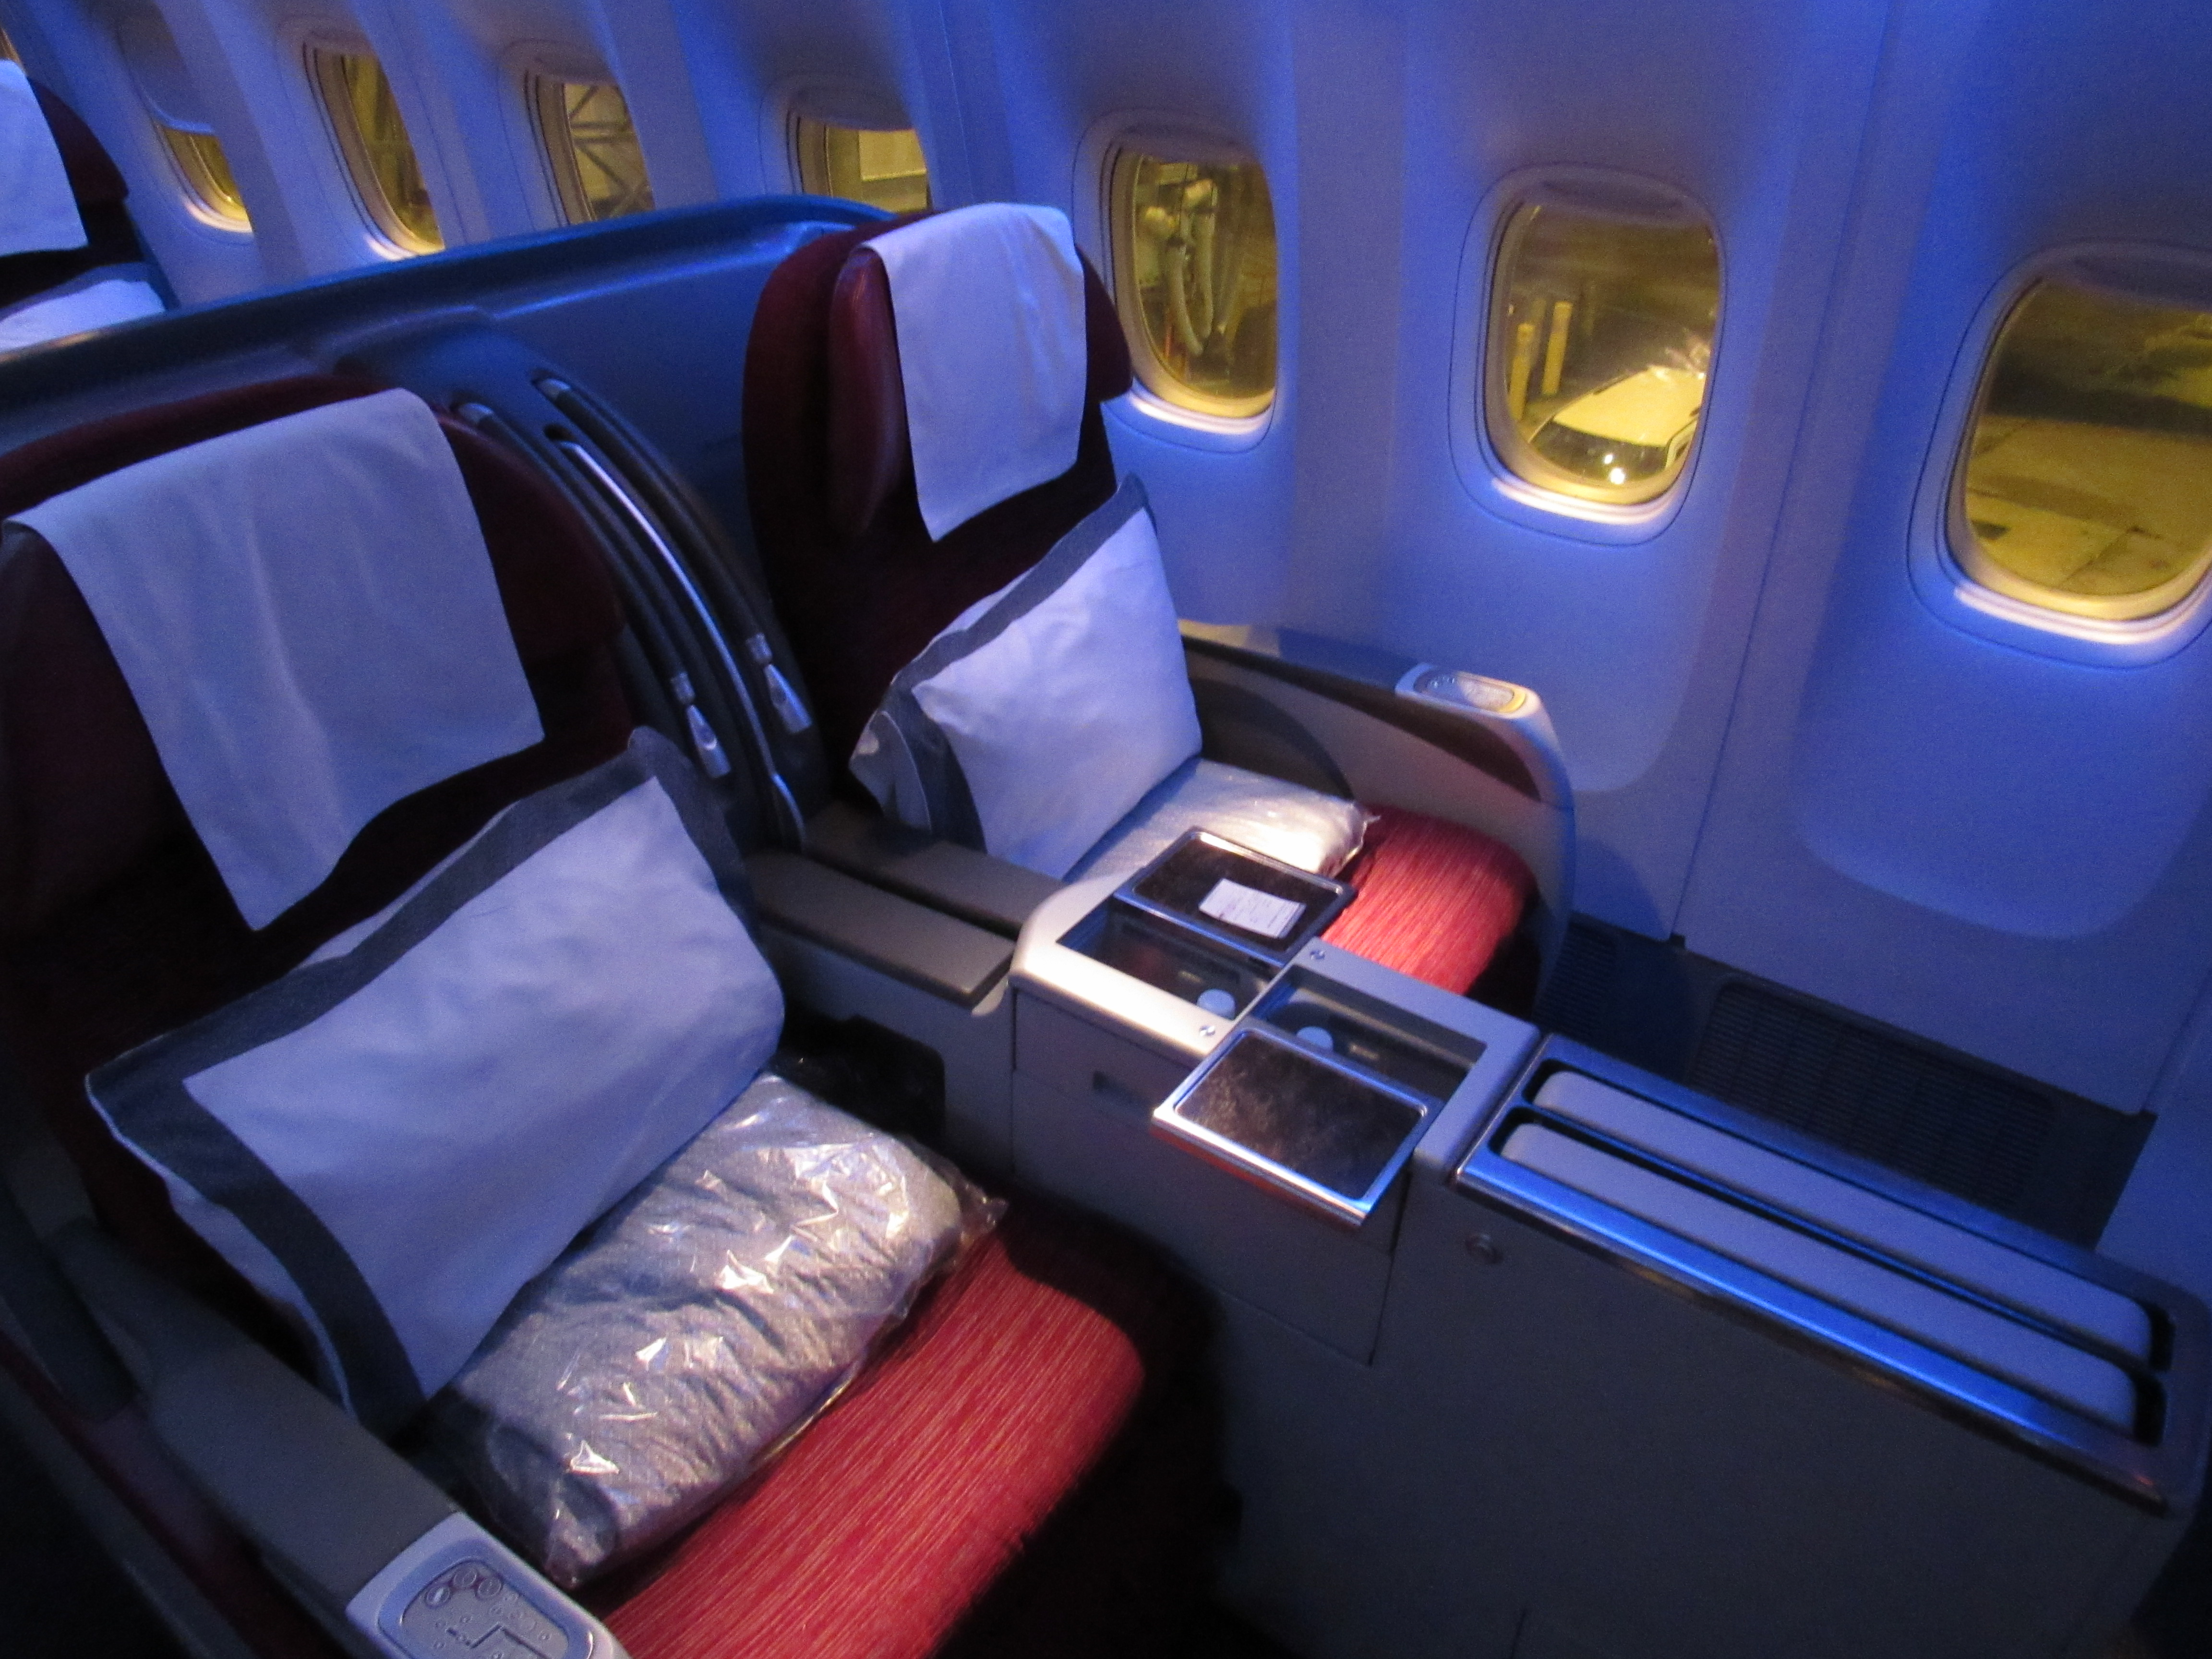 My Seat! 1A on Qatar Airways